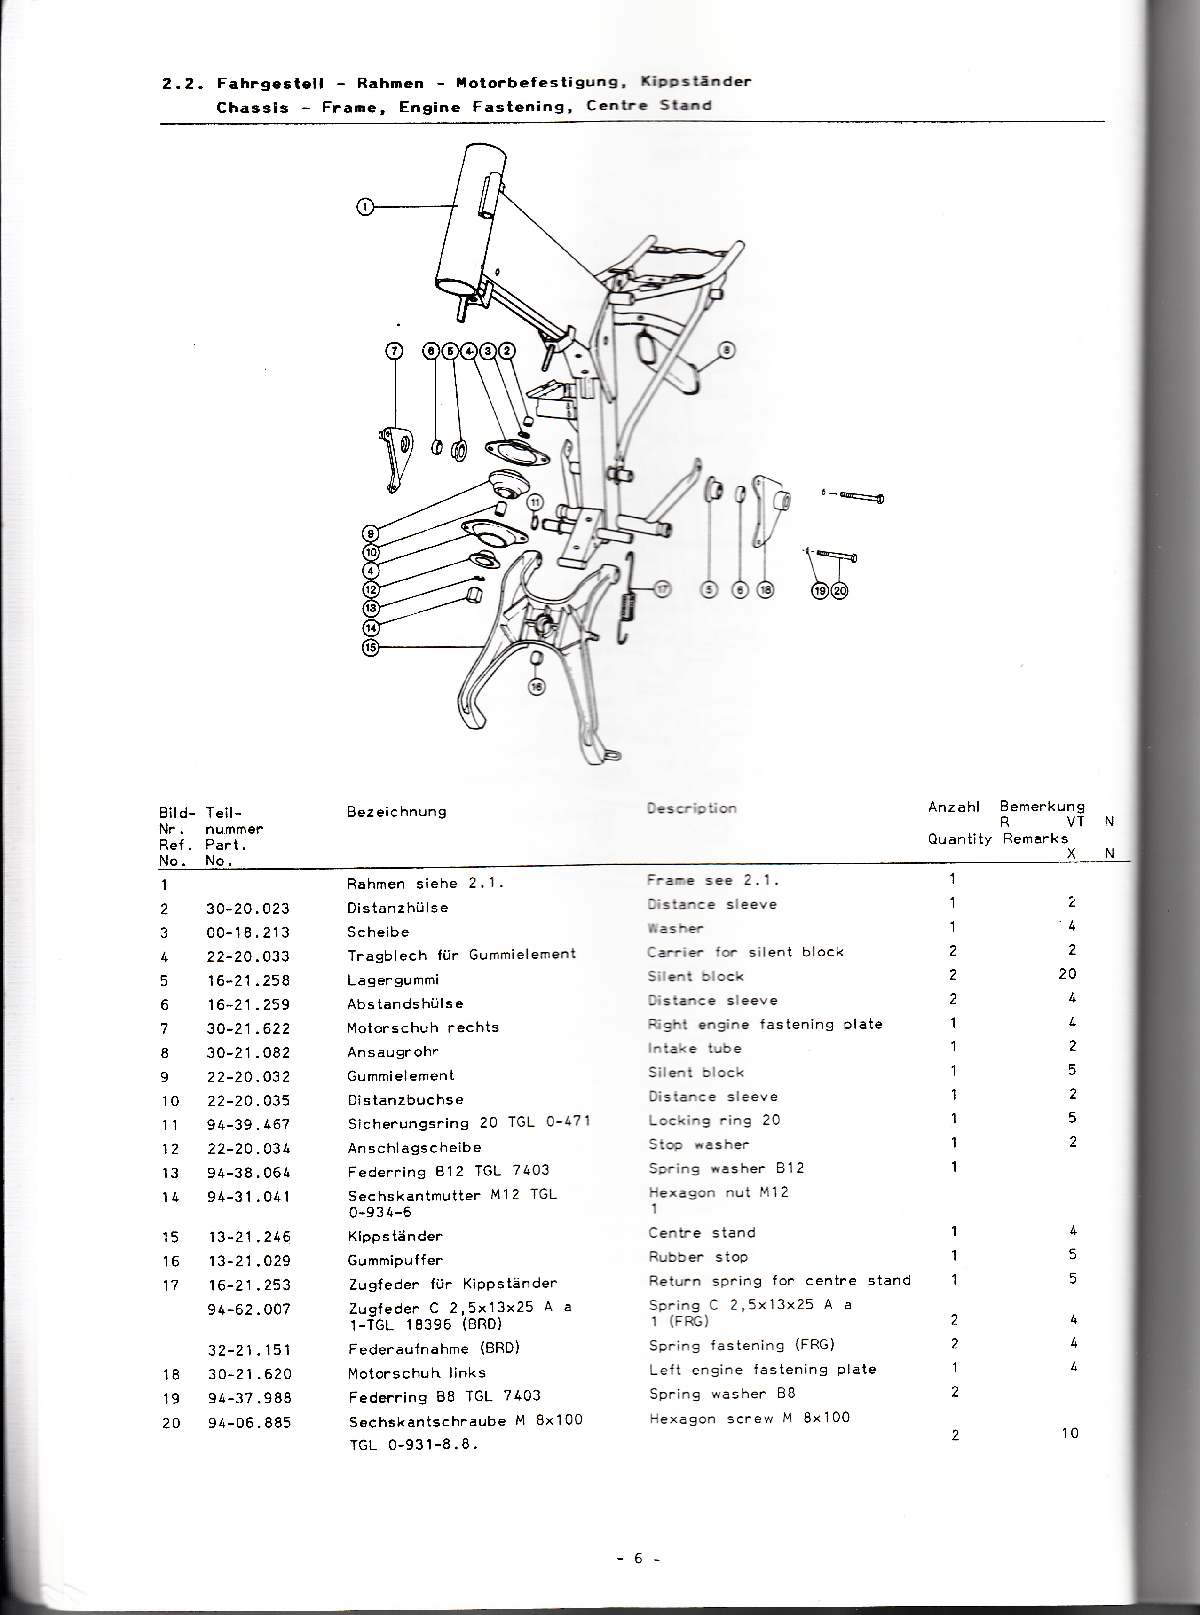 Katalog MZ 251 ETZ - 2.2. Fahrgestell - Rahmen - Motorbefestigung, Kippständer